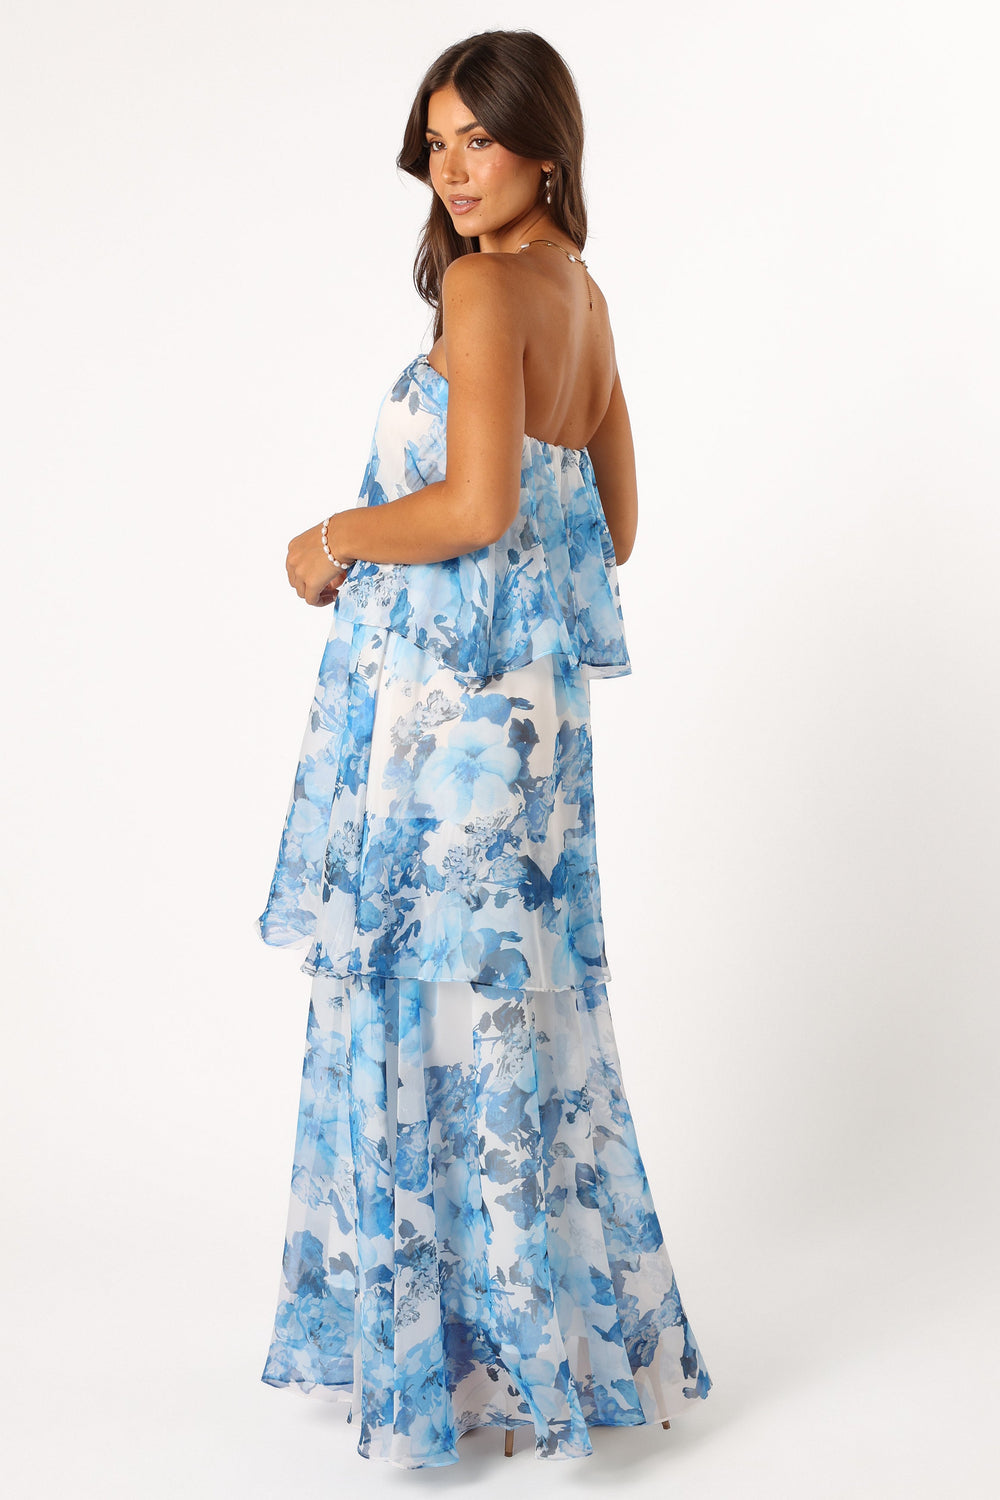 DRESSES @Bloom Strapless Maxi Dress - Blue White Floral (Hold for Modern Romance)